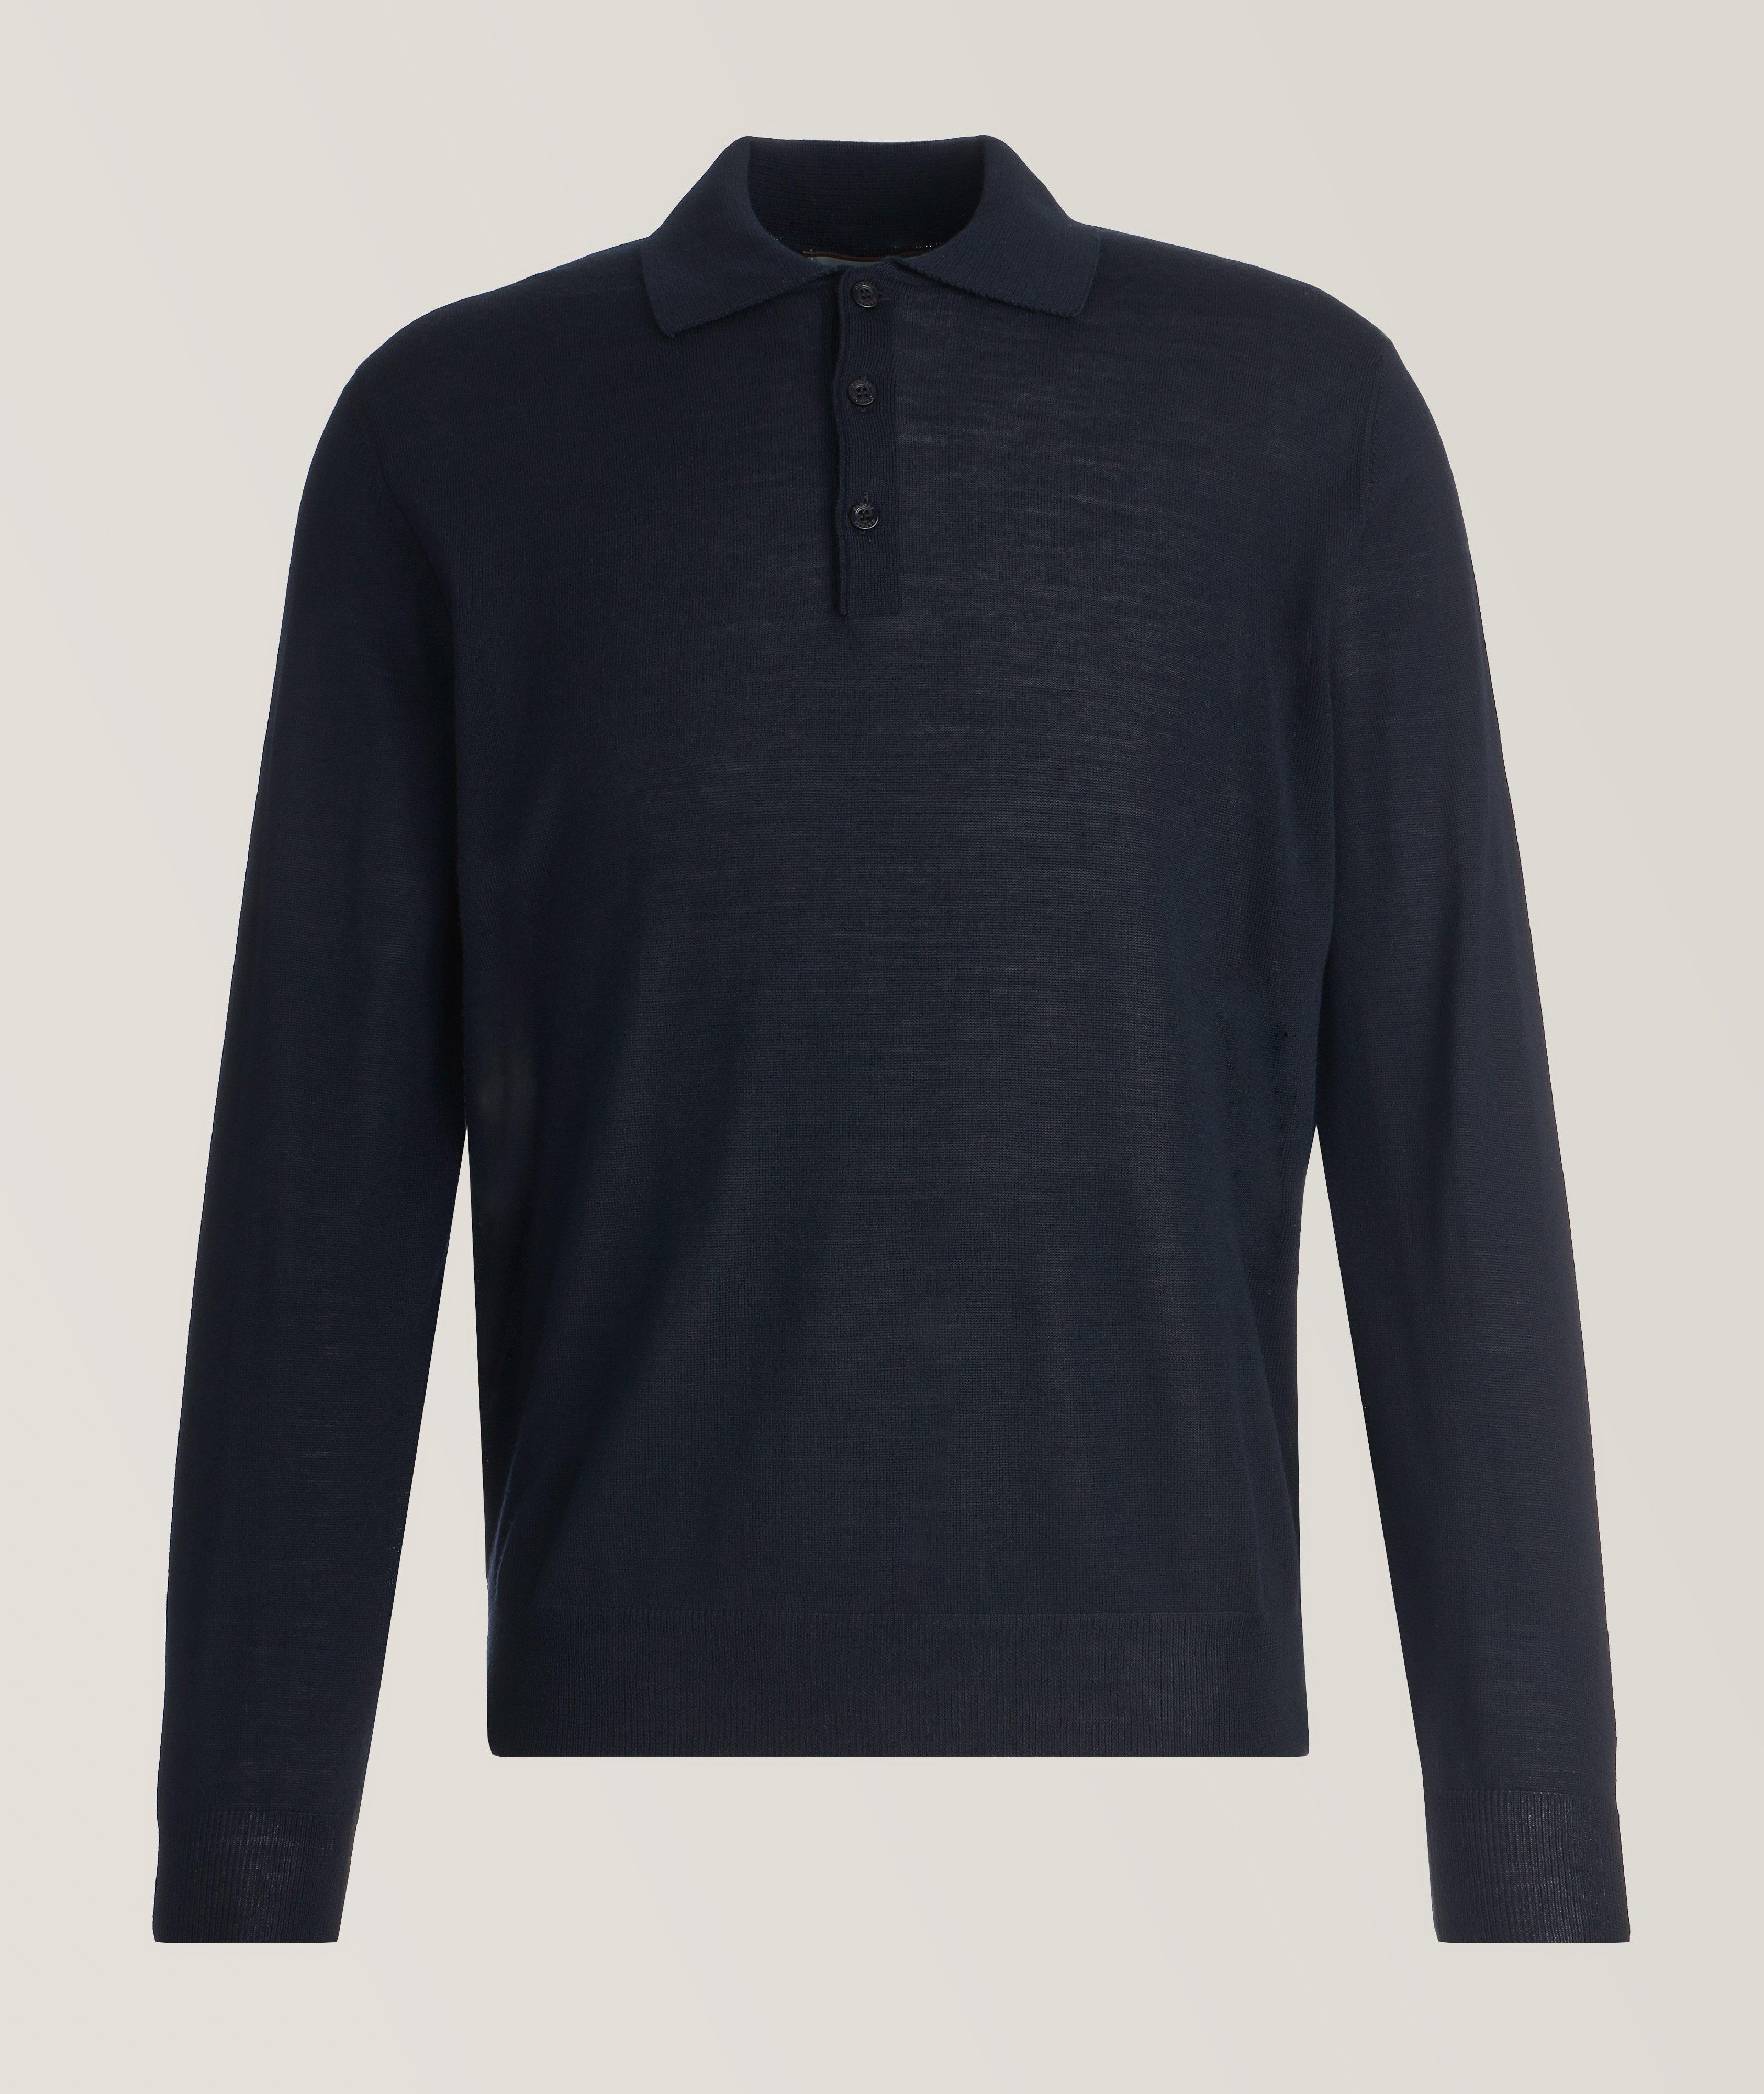 Canali Long-Sleeve Merino Wool Knit Polo | Sweaters & Knits | Harry Rosen